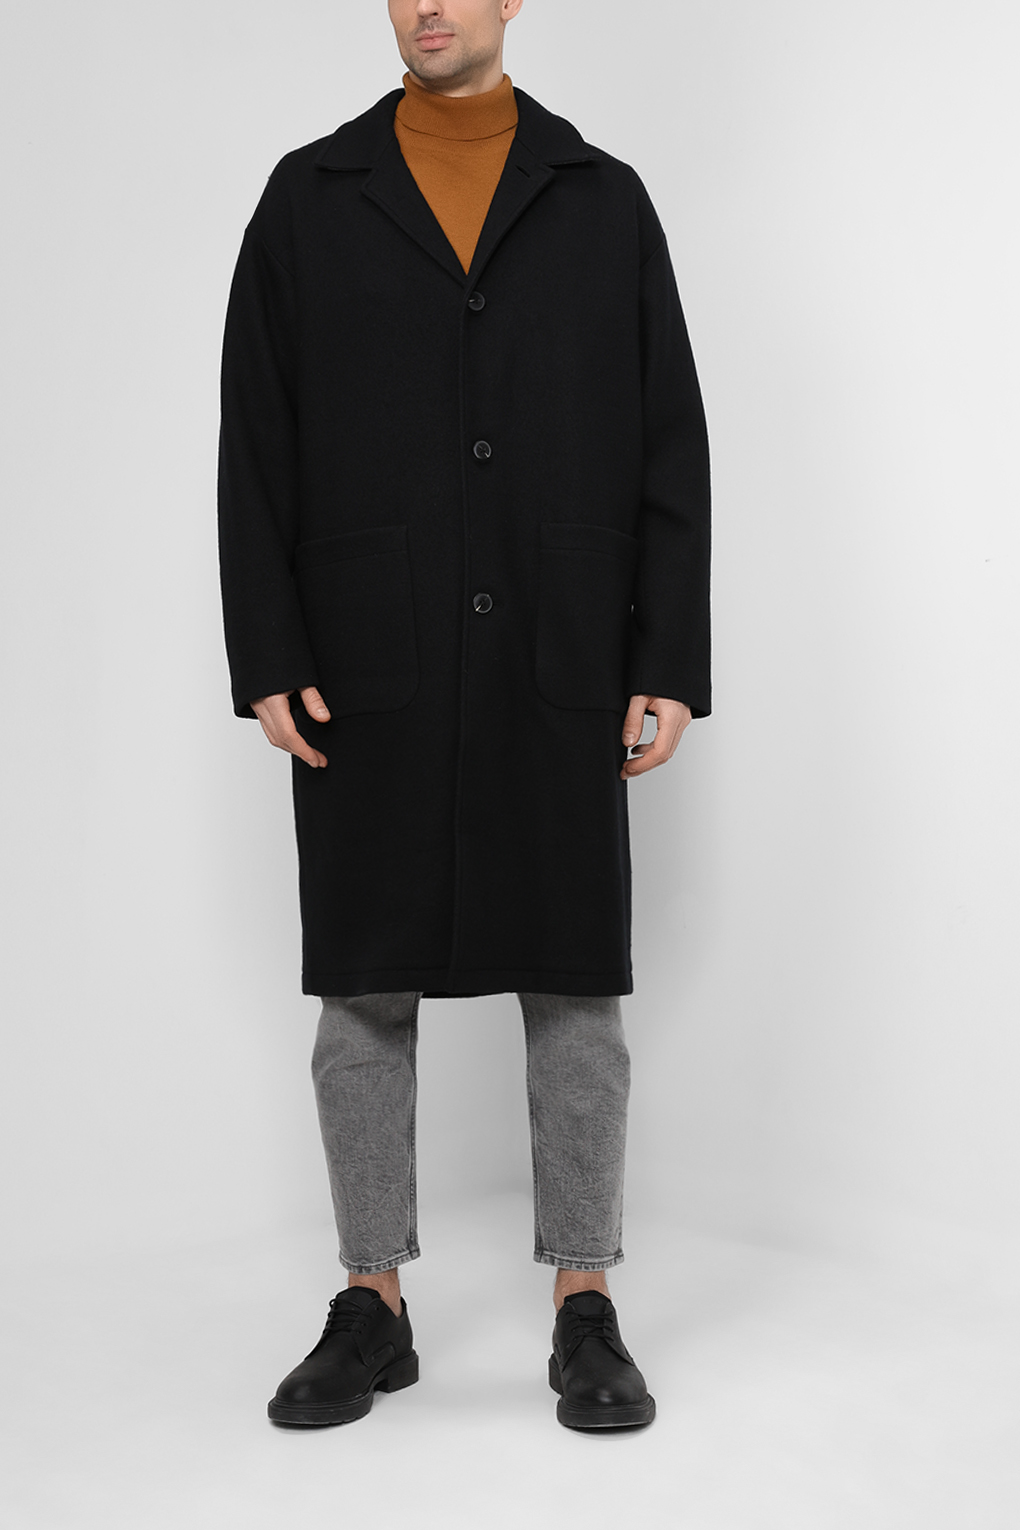 Пальто мужское Marc O’Polo 229 6201 71012 черное 50 RU